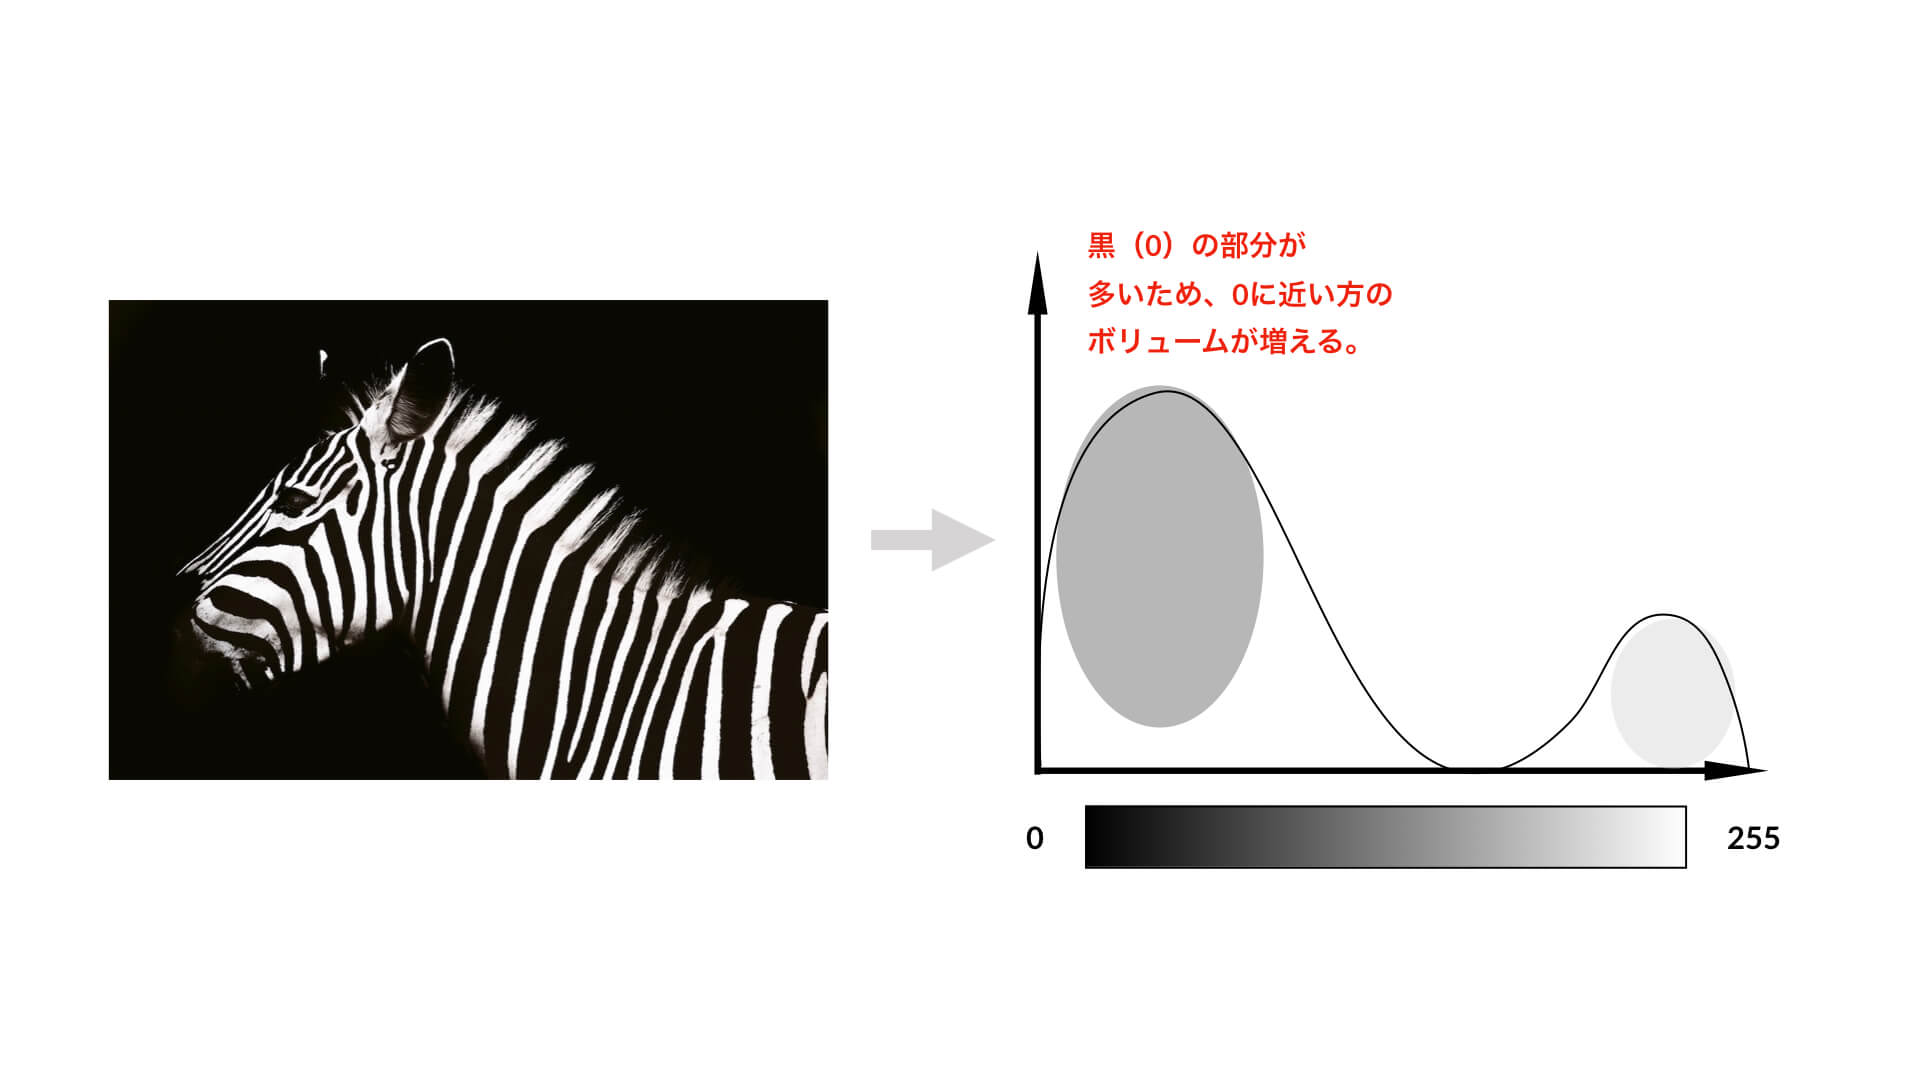 A Histogram of the Zebra Image